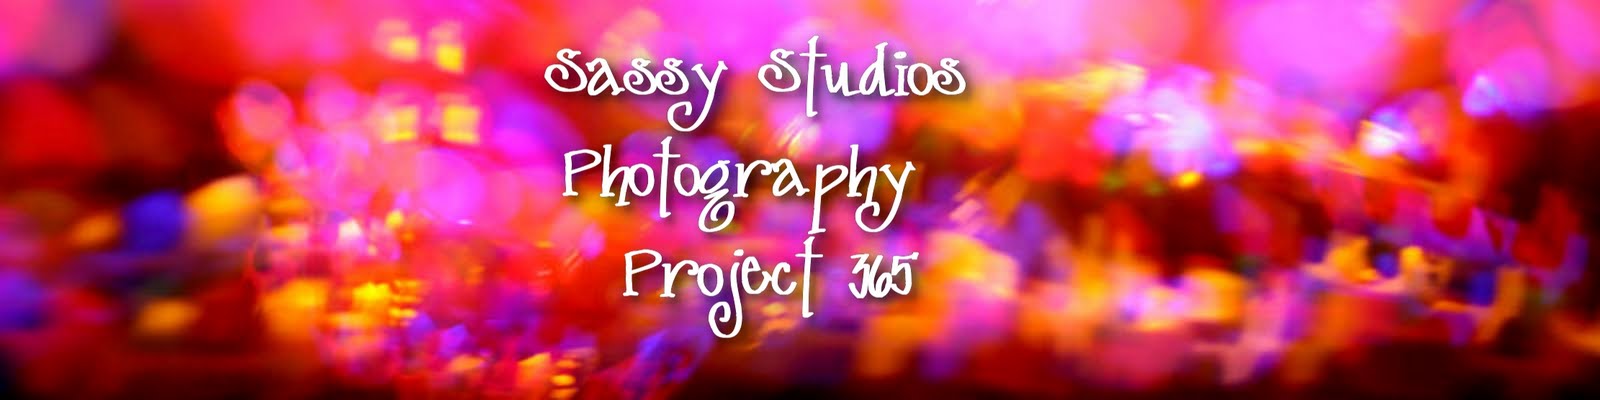 Project 365 Sassy Studios Photography